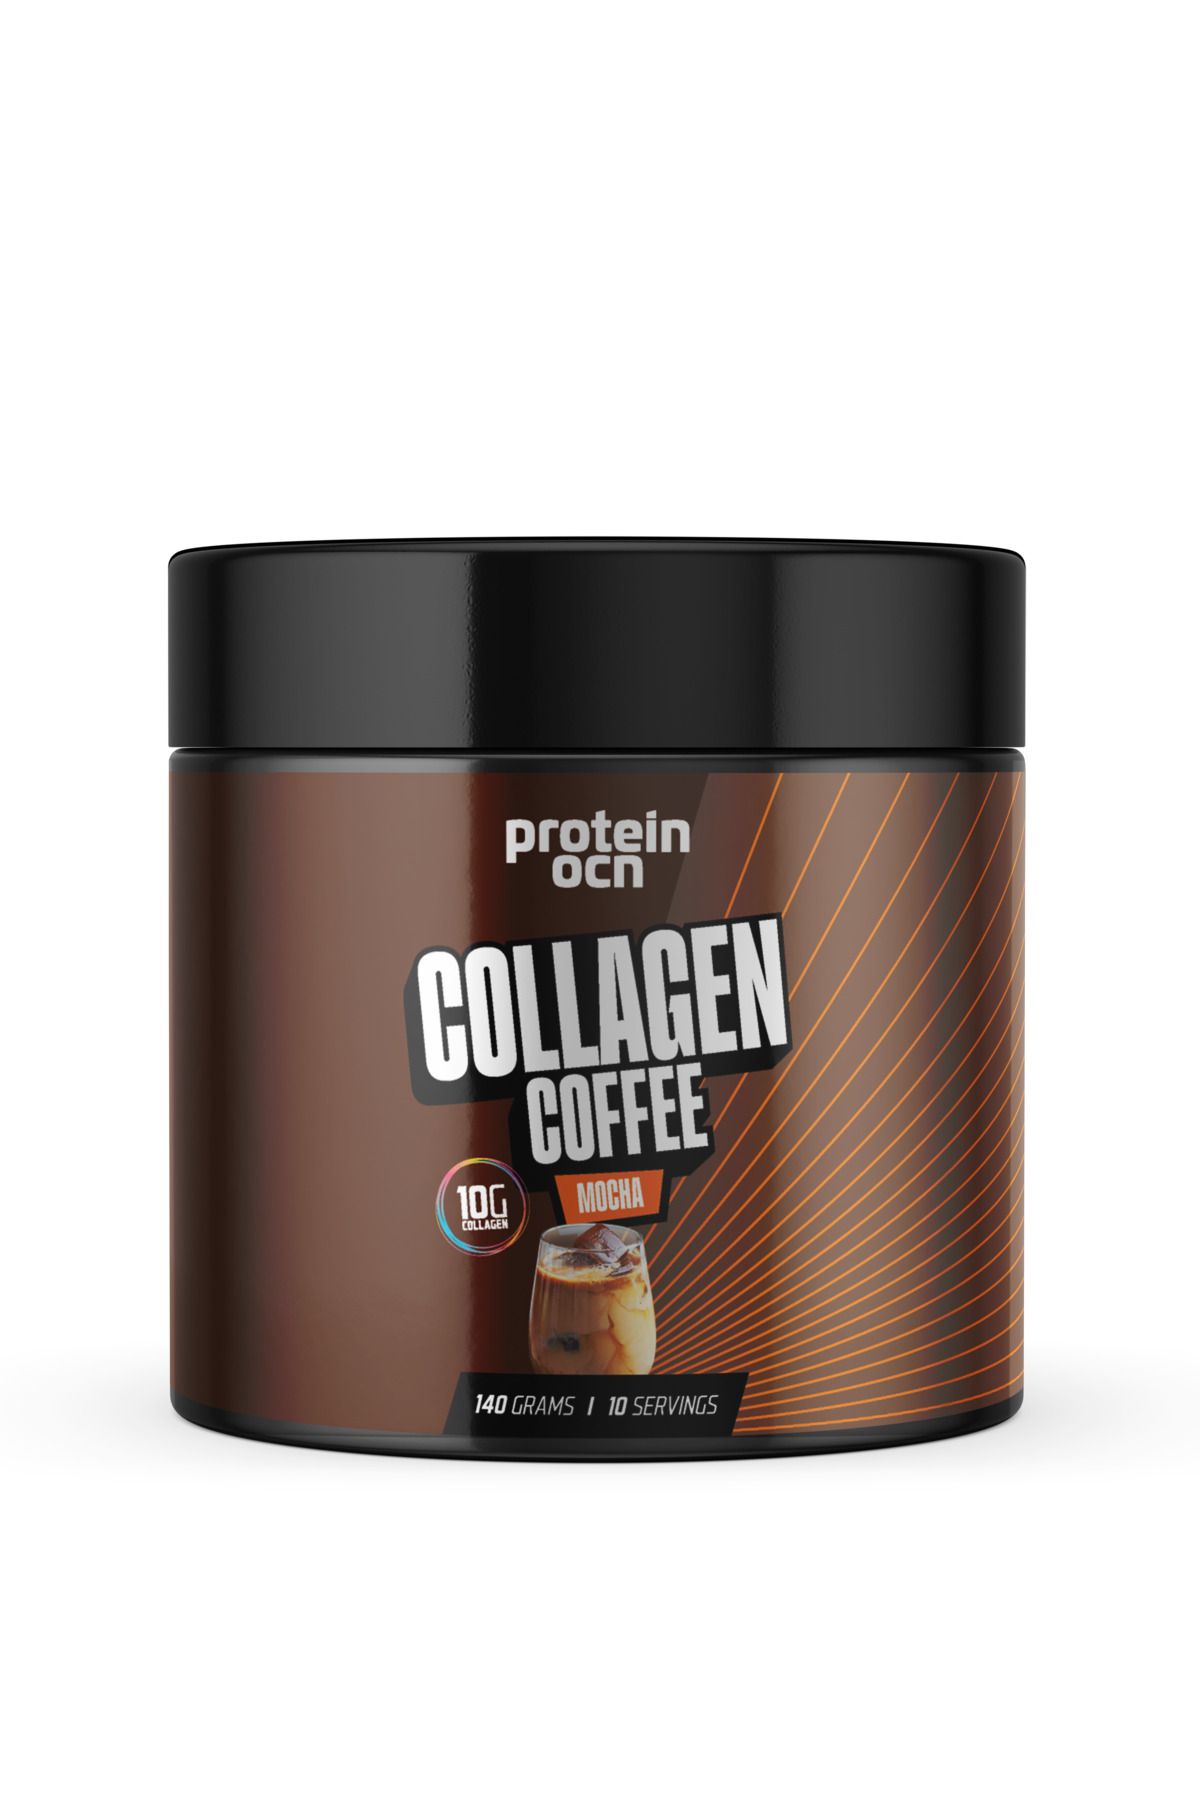 Proteinocean COLLAGEN COFFEE - MOCHA - 140gr - 10 servis